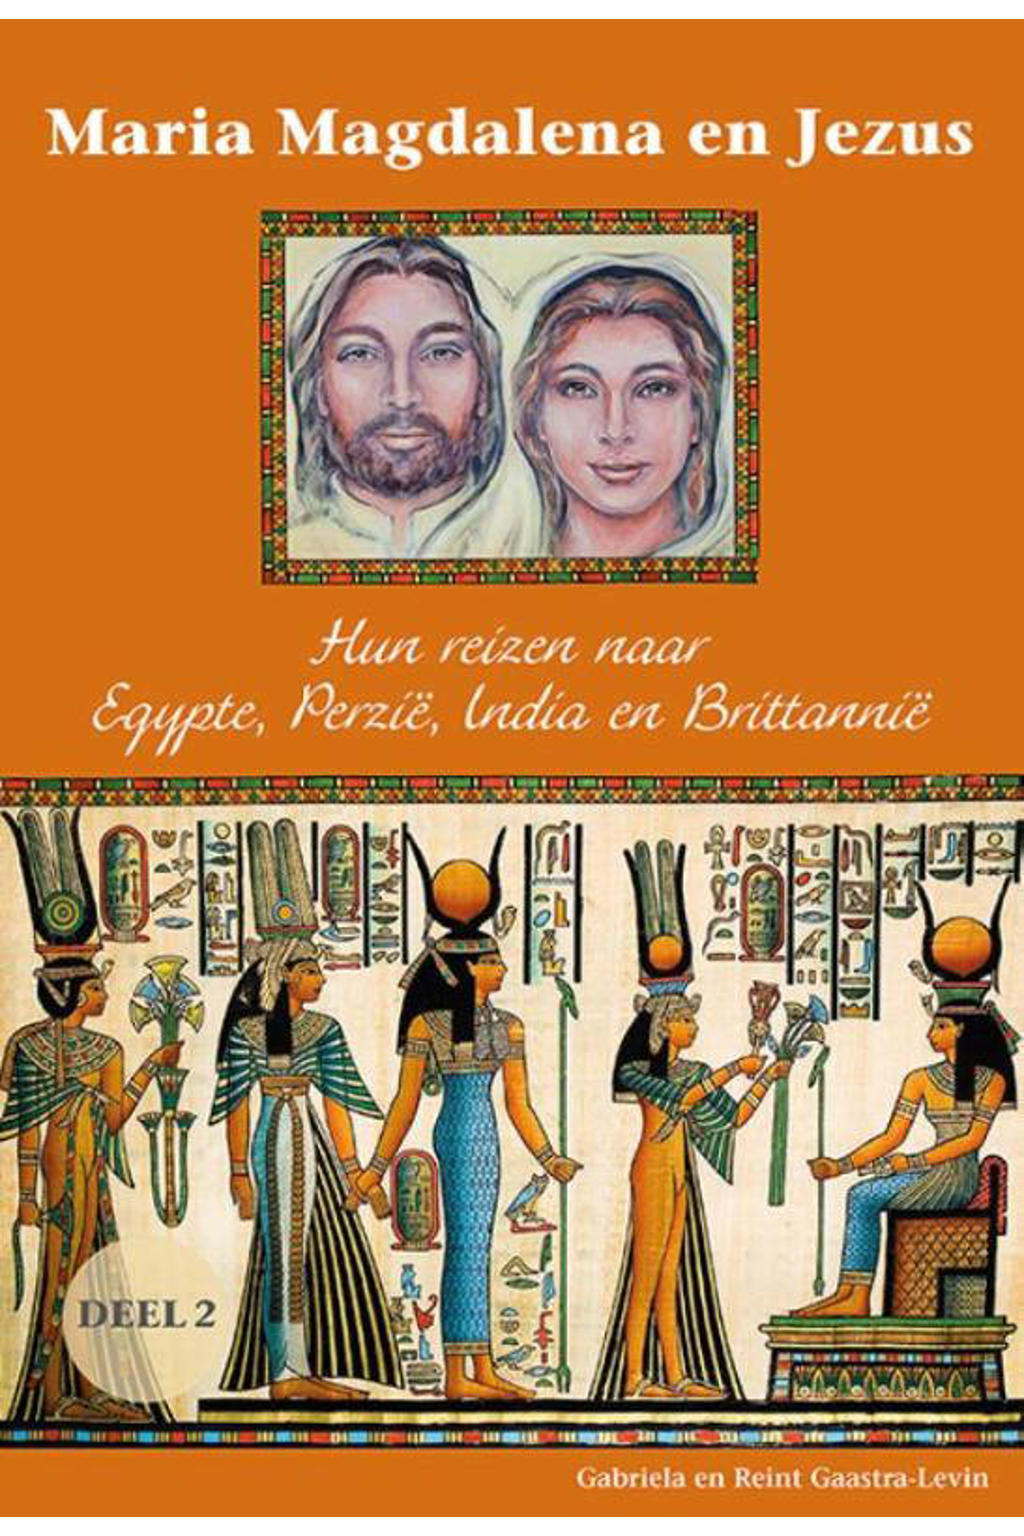 Maria Magdalena en Jezus 2 Hun reizen naar Egypte, Perzië, India en Brittannië - Gabriela Gaastra-Levin en Reint Gaastra-Levin